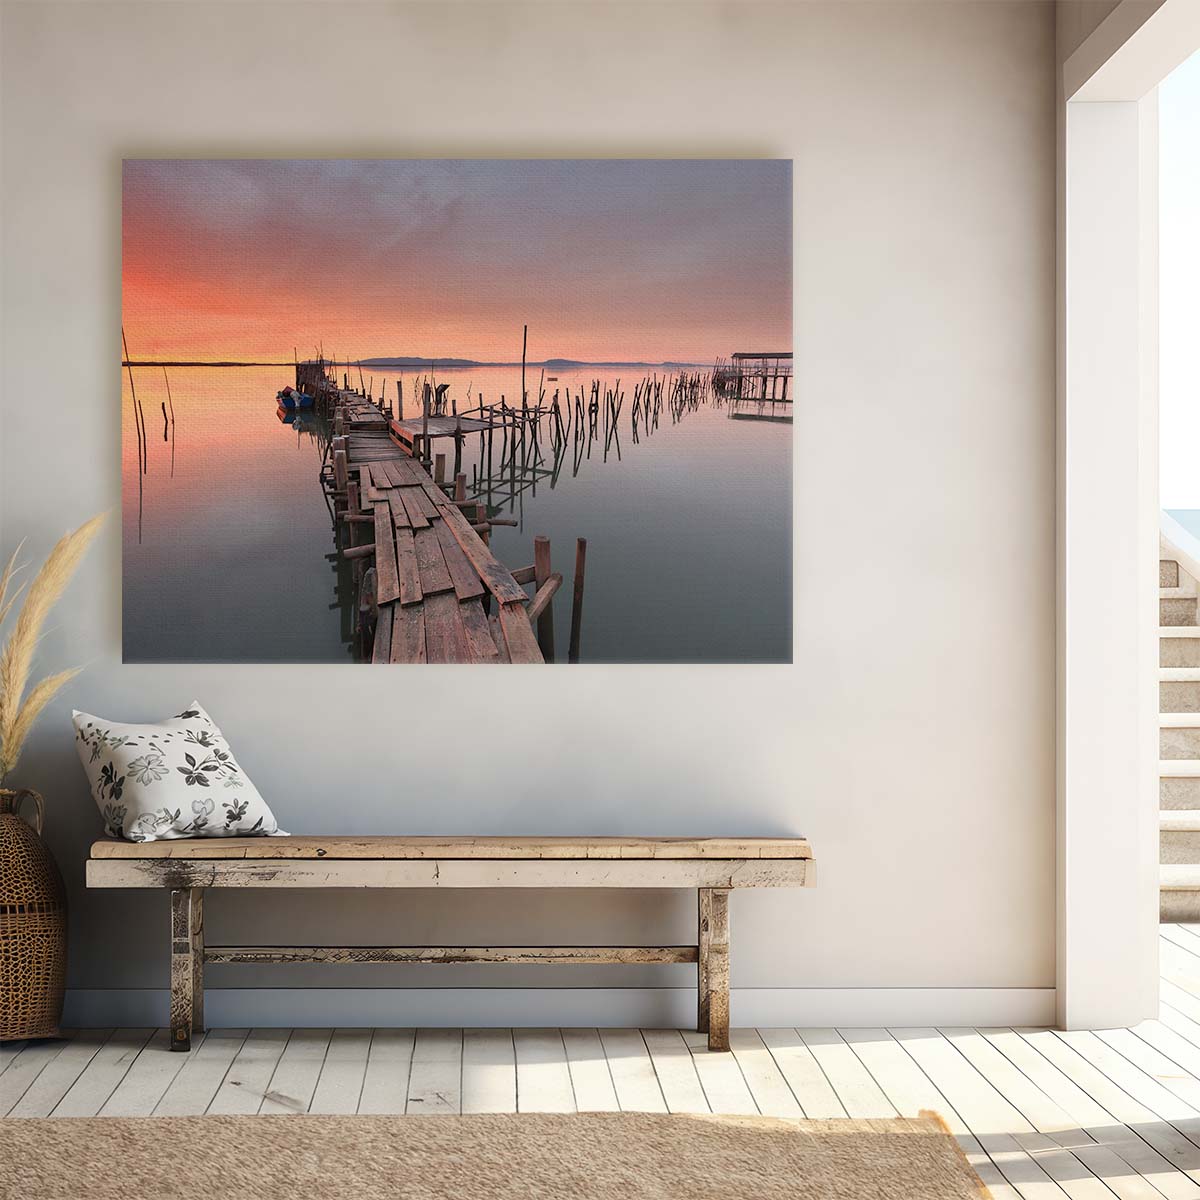 Carrasqueira Pier Serene Sunset Seascape Wall Art by Luxuriance Designs. Made in USA.